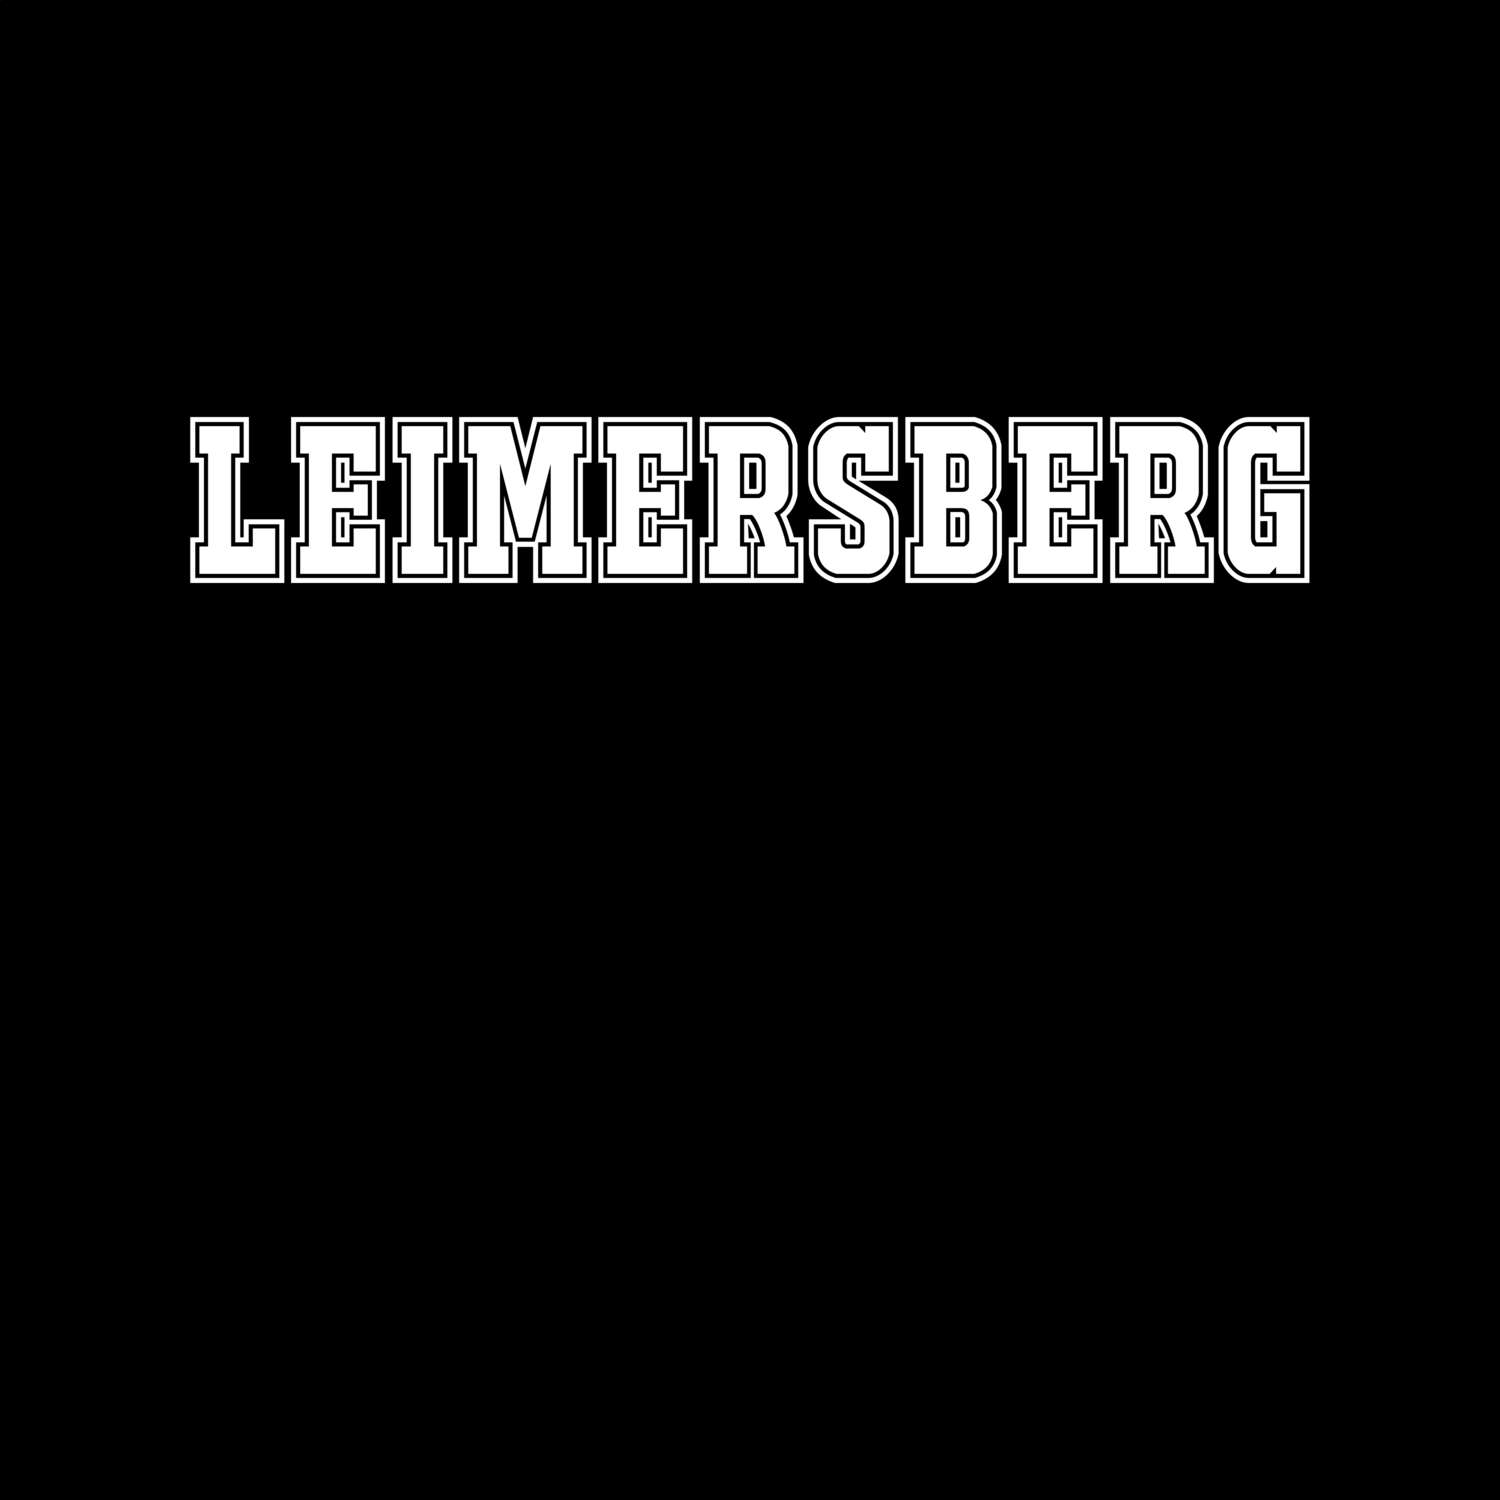 Leimersberg T-Shirt »Classic«